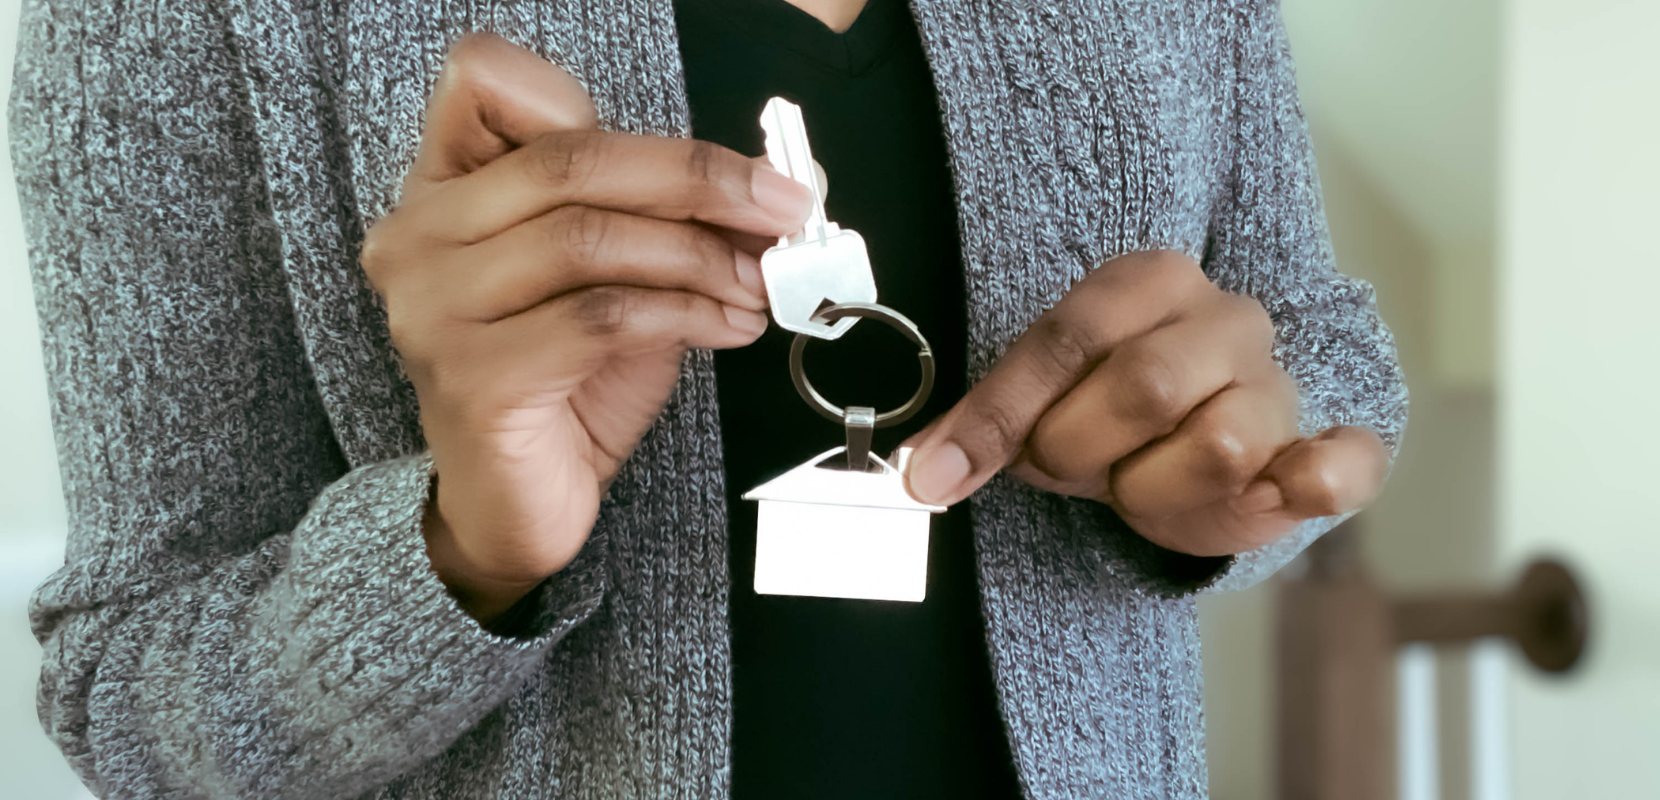 woman holding keys